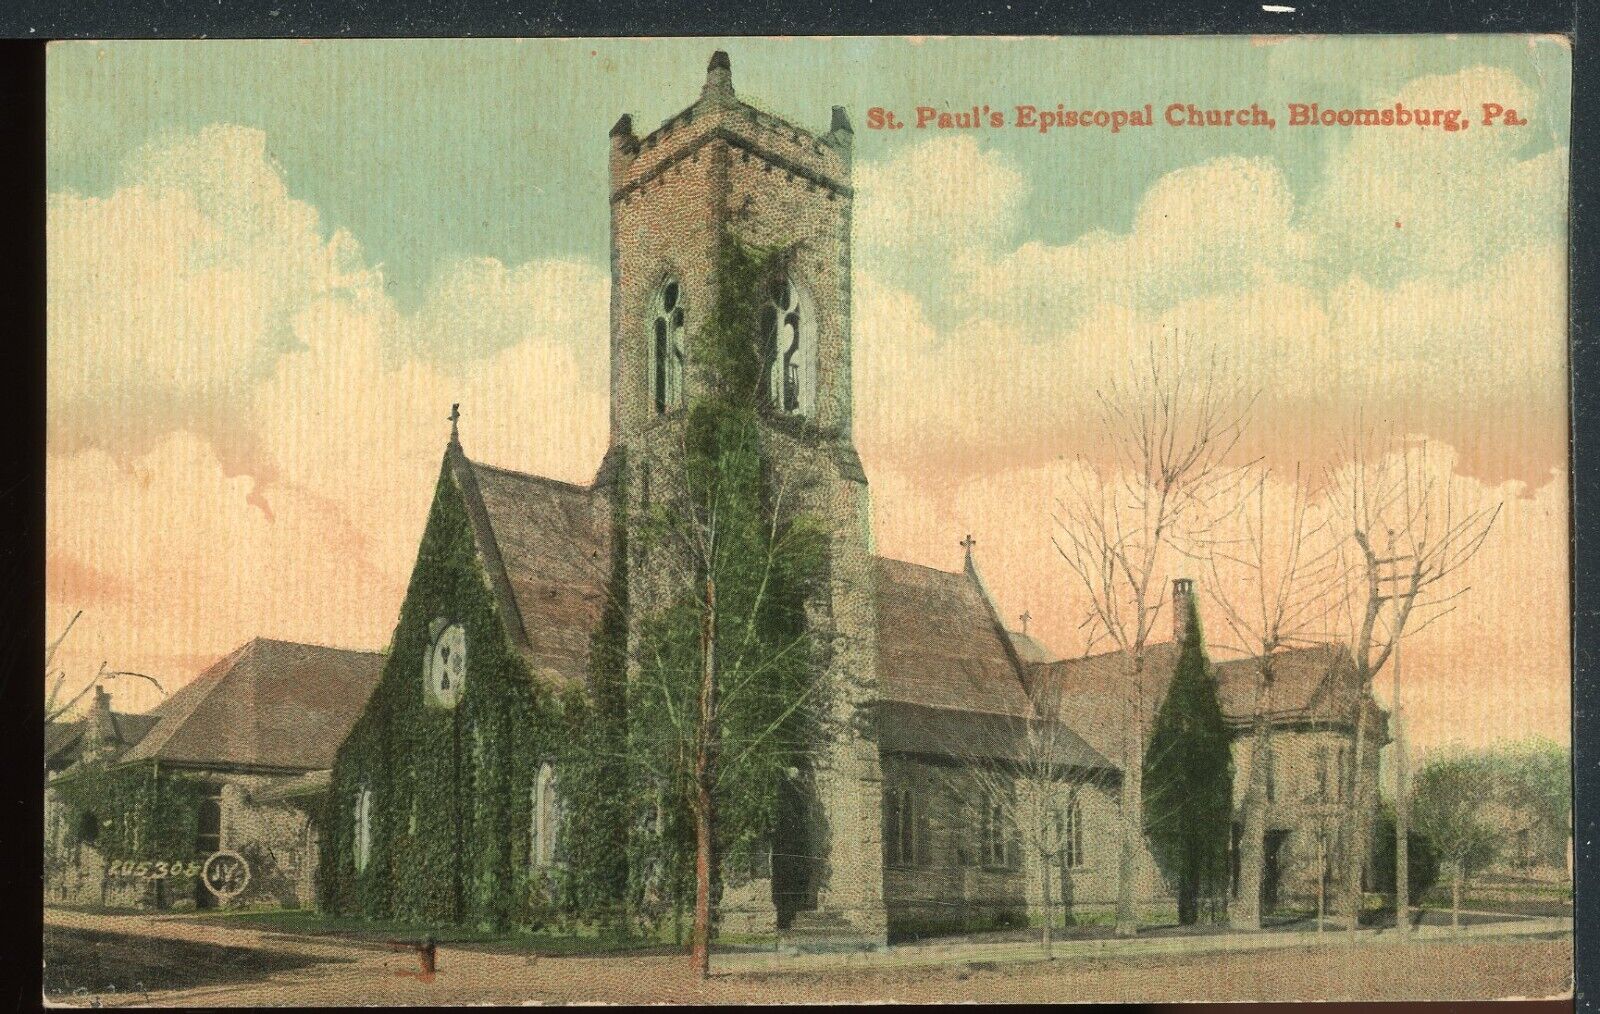 Older Bloomsburg PA St. Paul's Episcopal Church Vintage Postcard M1308a